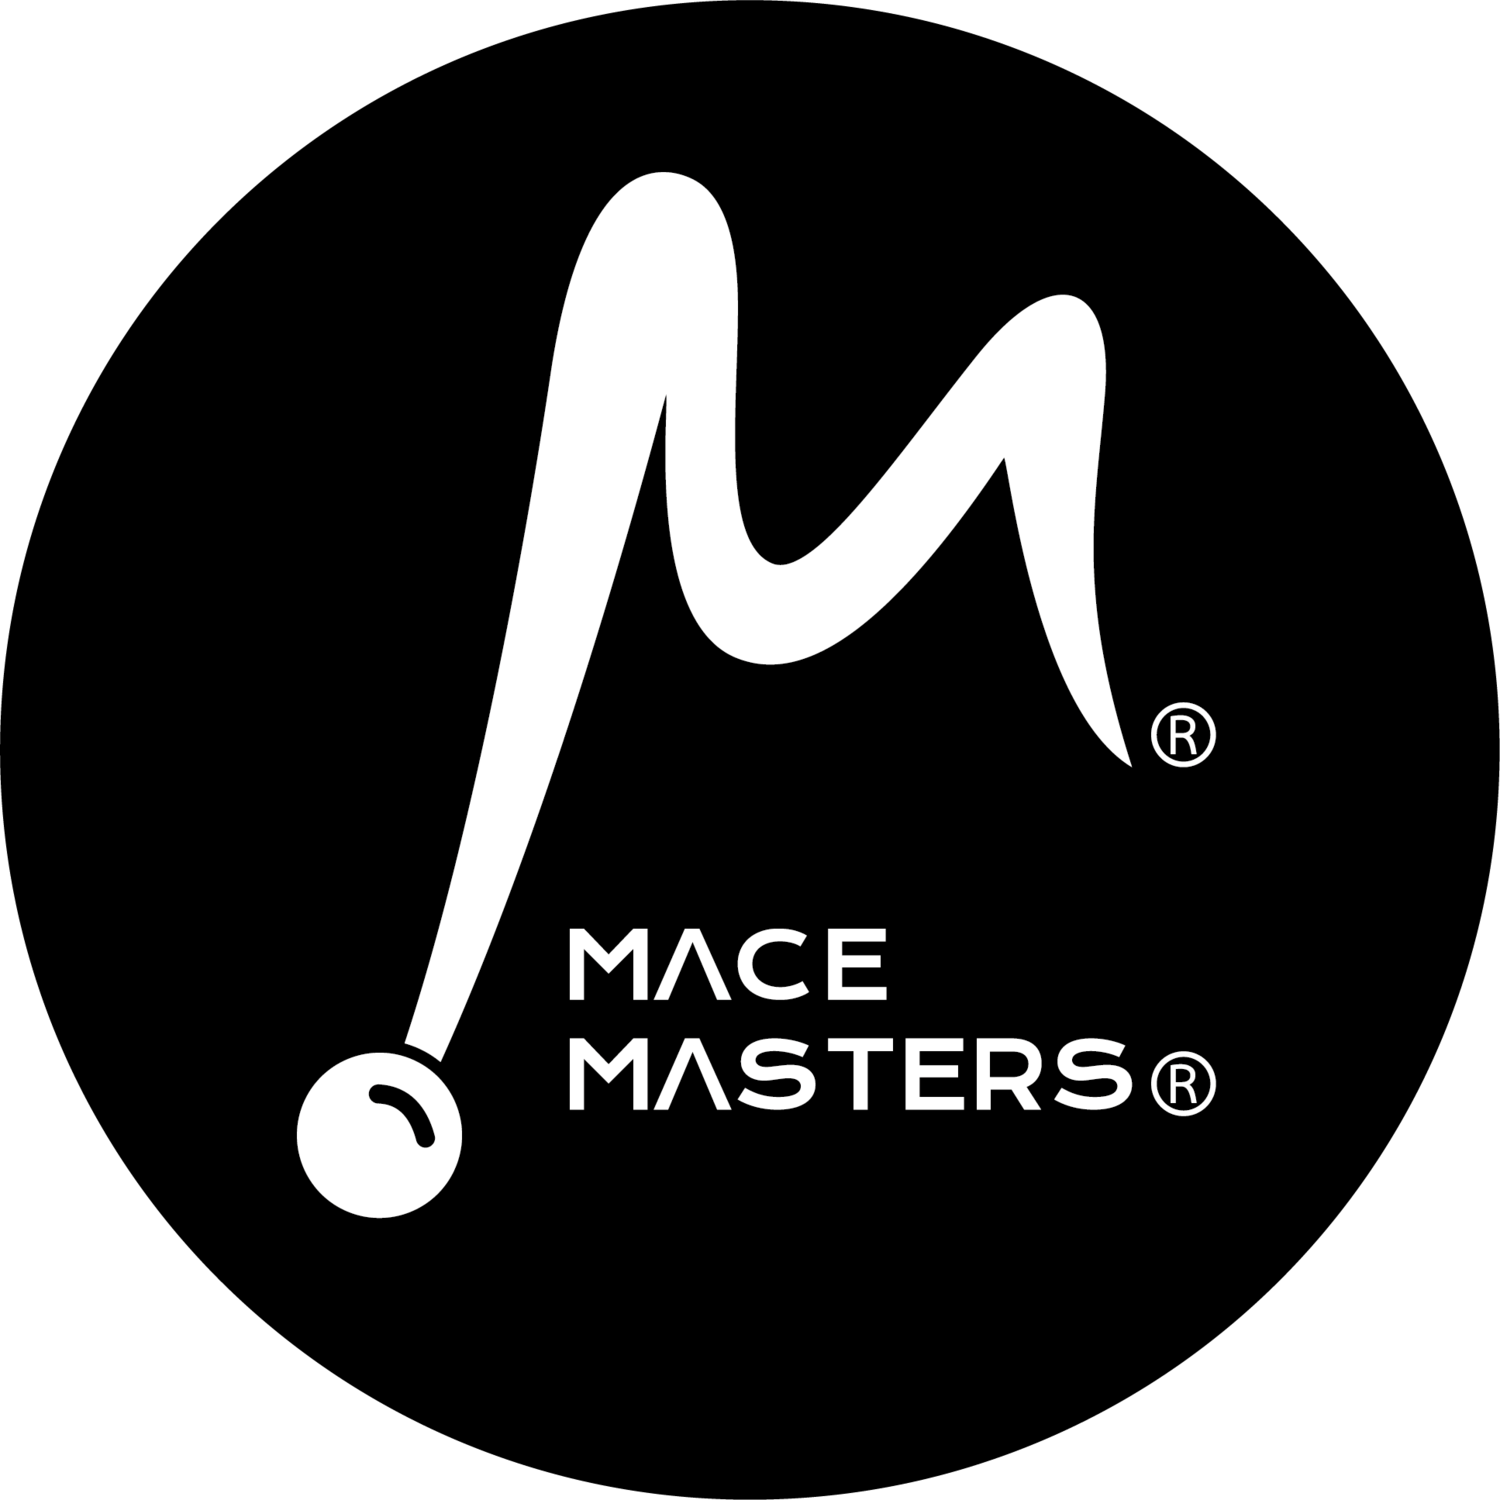 Macemasters™